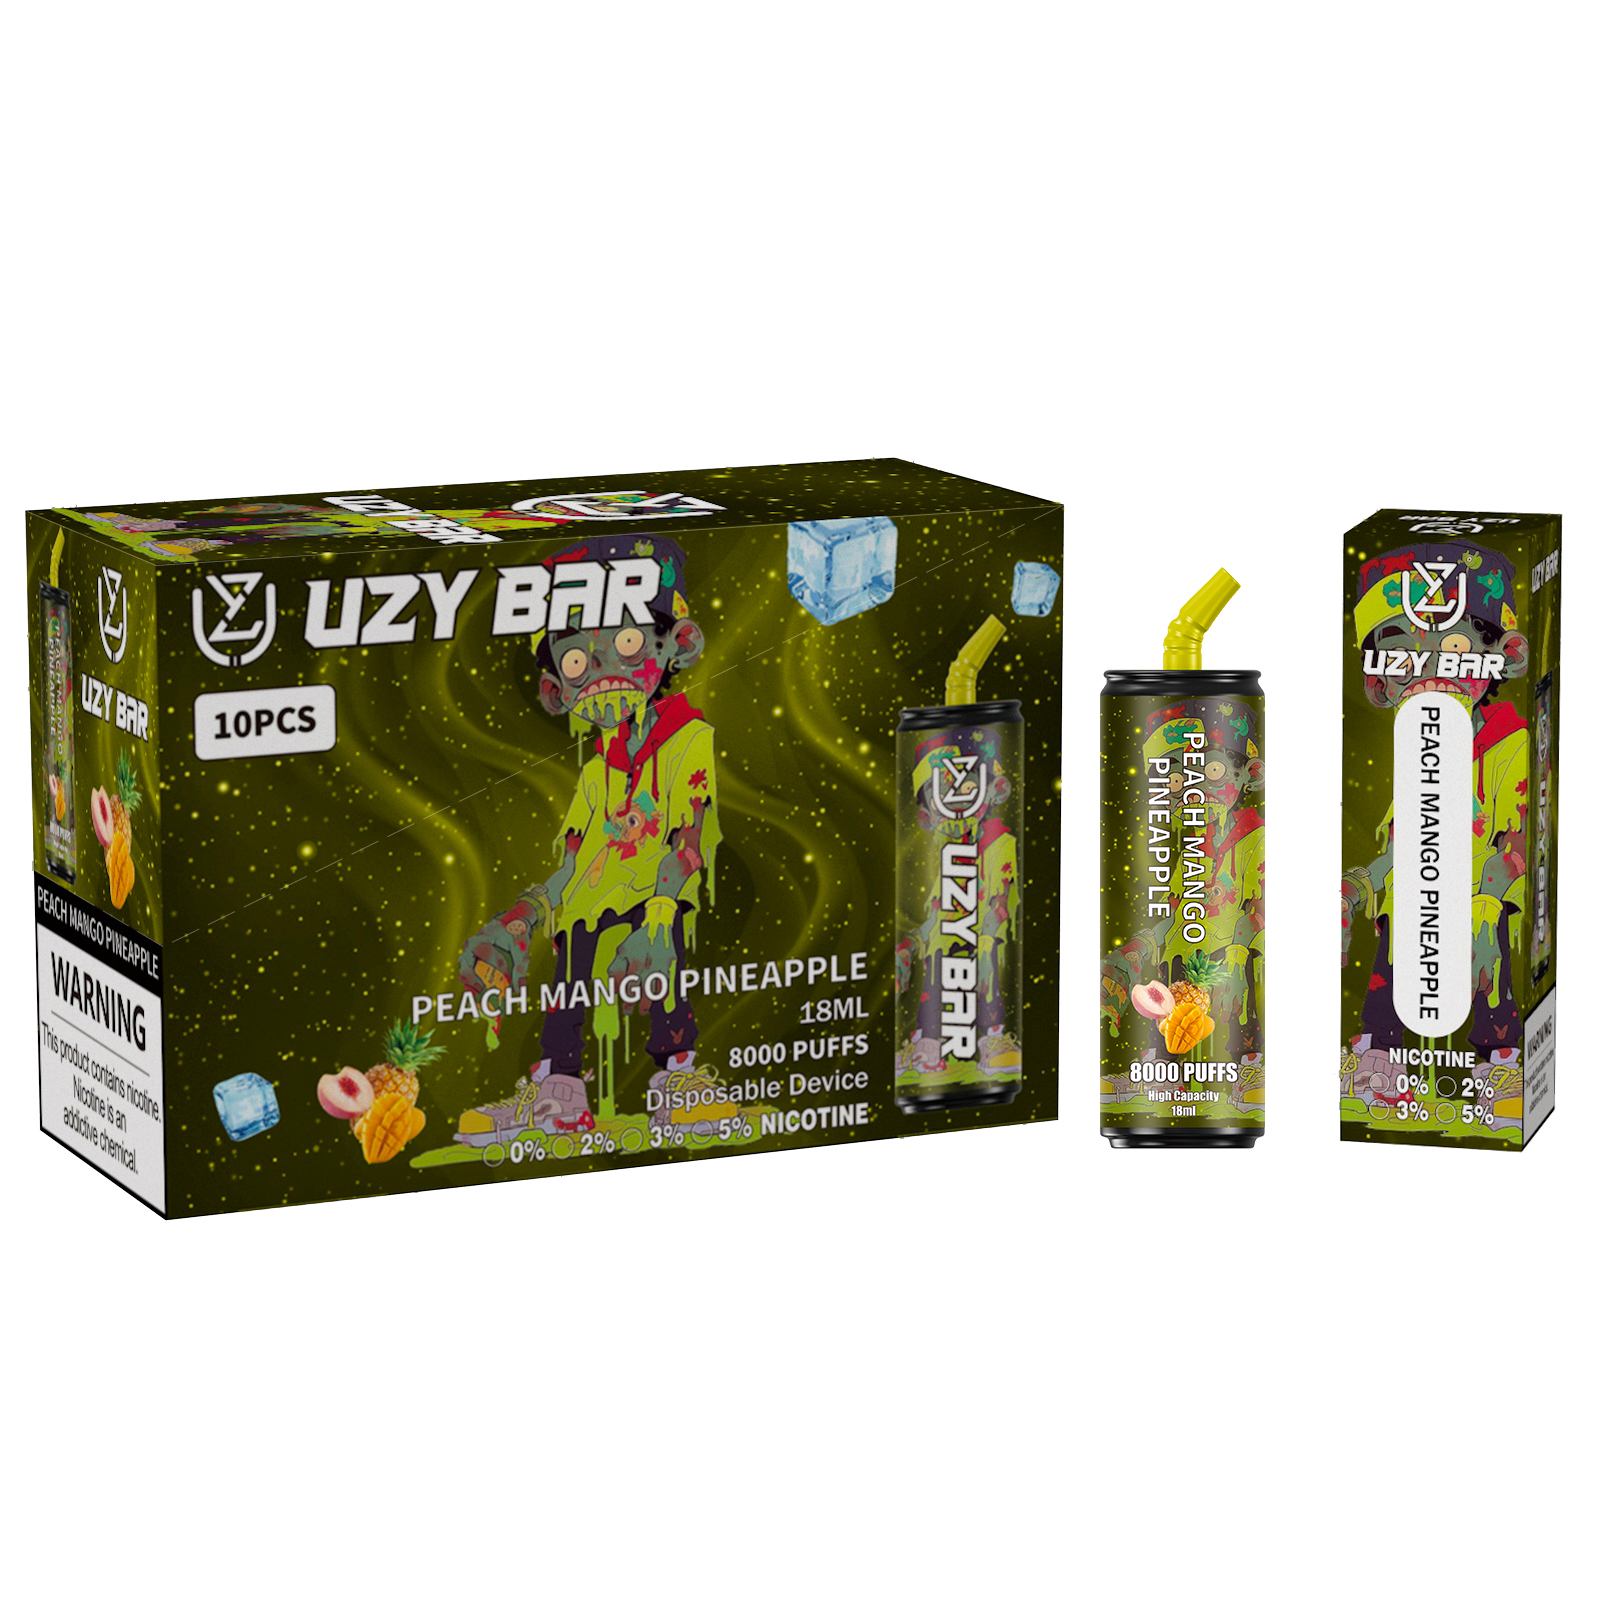 Original UZY bar E Cigarette puff 8000 10 Flavors 18ml Rechargeable Disposable Vape Pen Device Pod Smok Vapes Kit 8000 puffs NIC 0% 2% 3% 5% 1100Mah Battery instock